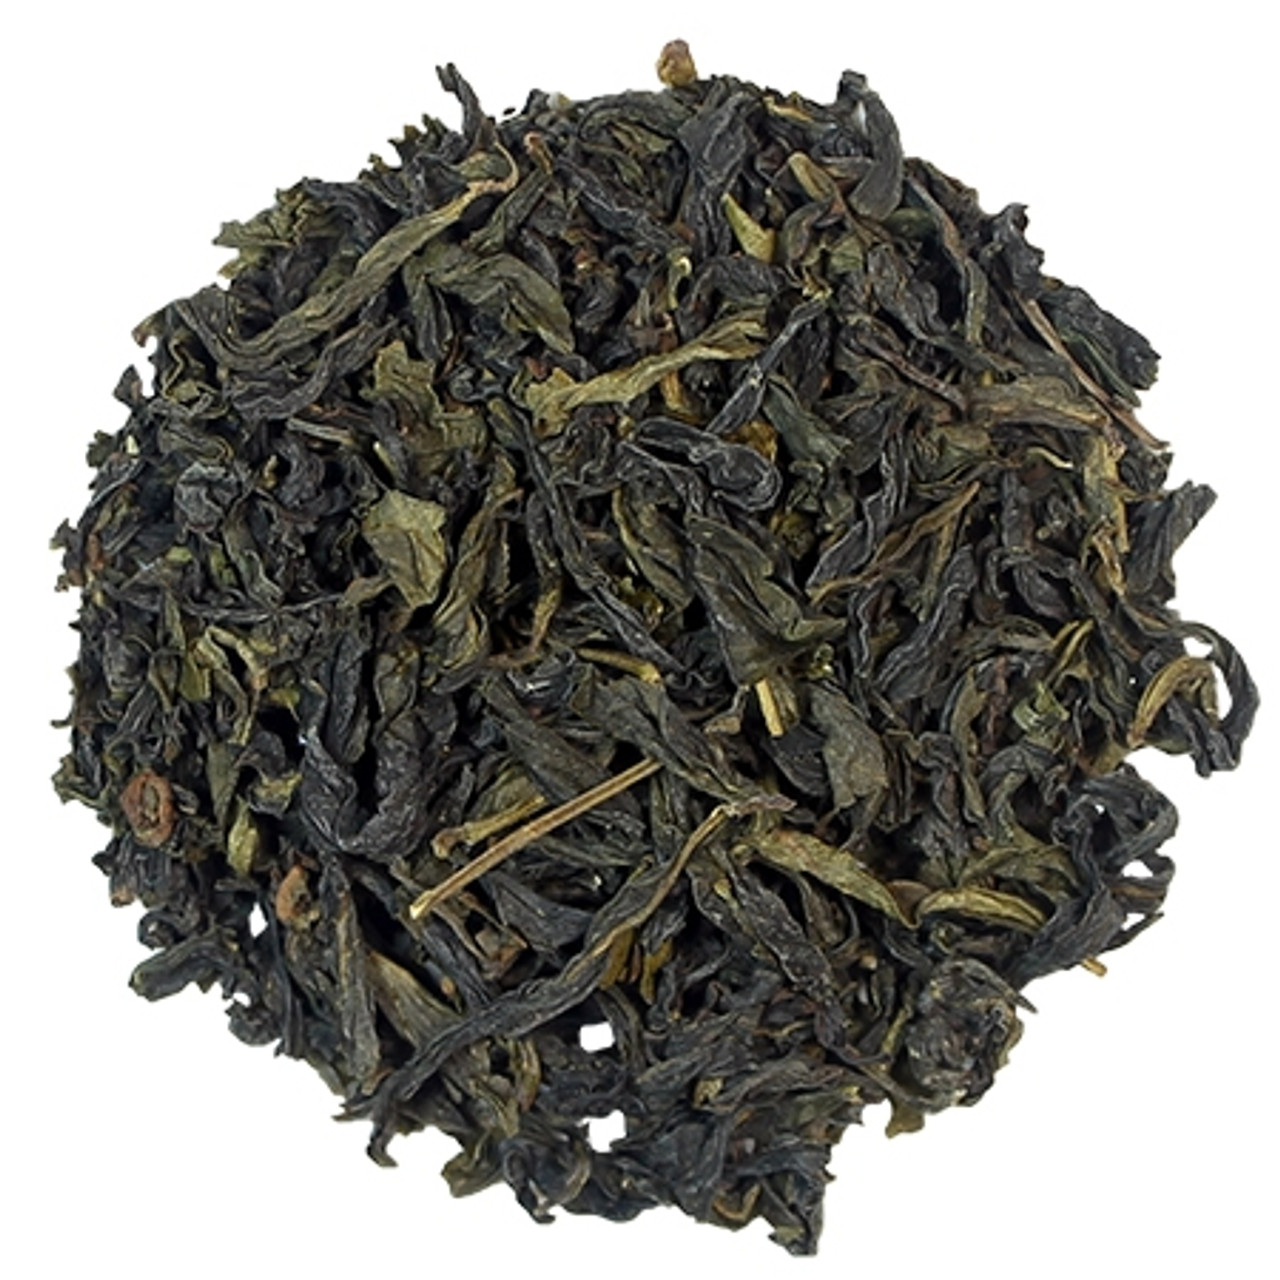 Taiwan Oolong Tea. Bao Zhong Supreme Tea